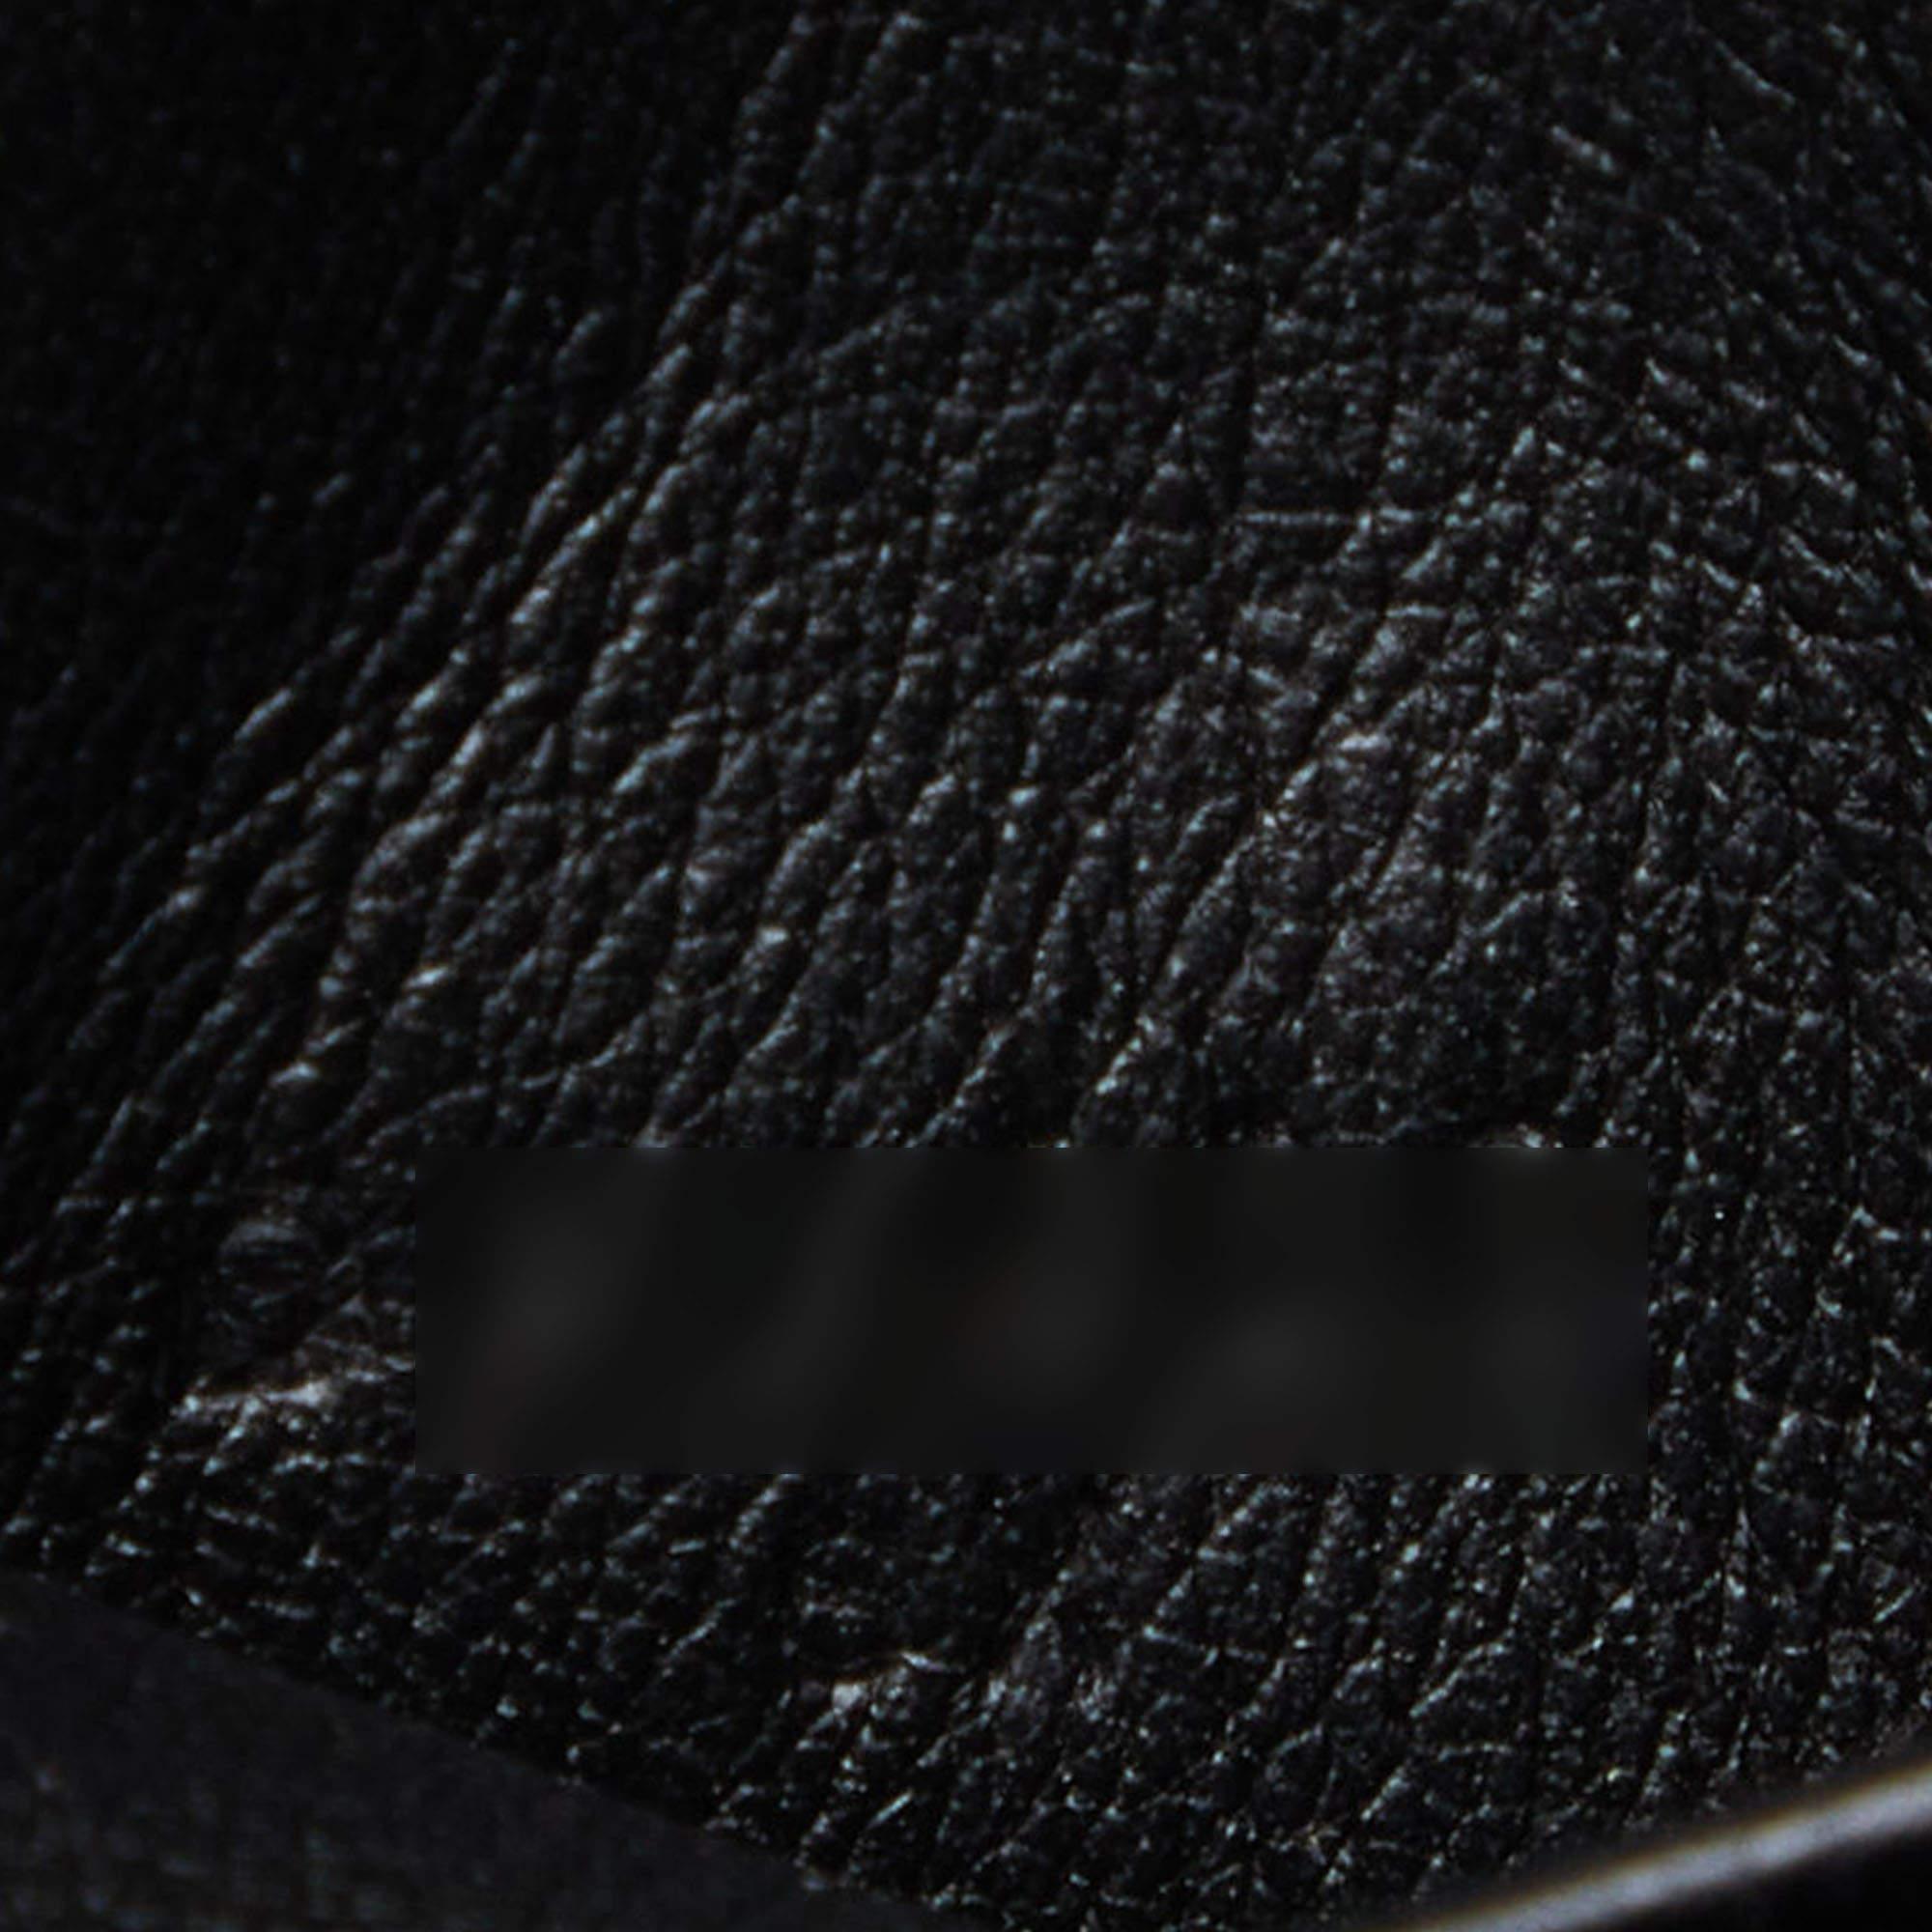 Hermès Black Taurillon Clemence Leather Gold Finish Mini Lindy Bag For Sale 2